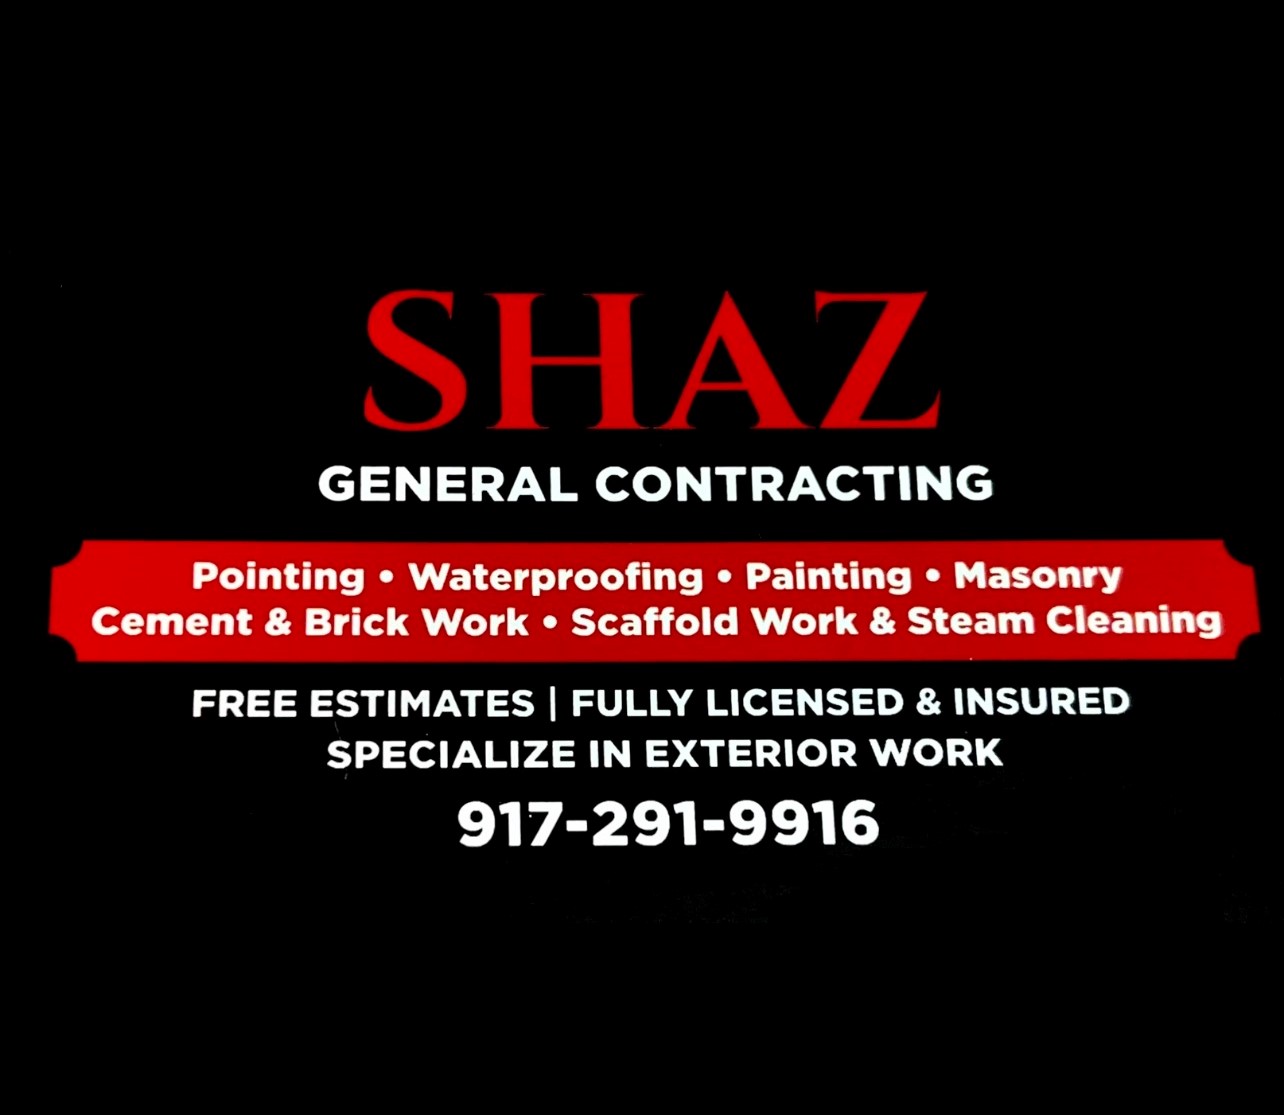 Shaz General Contracting Logo